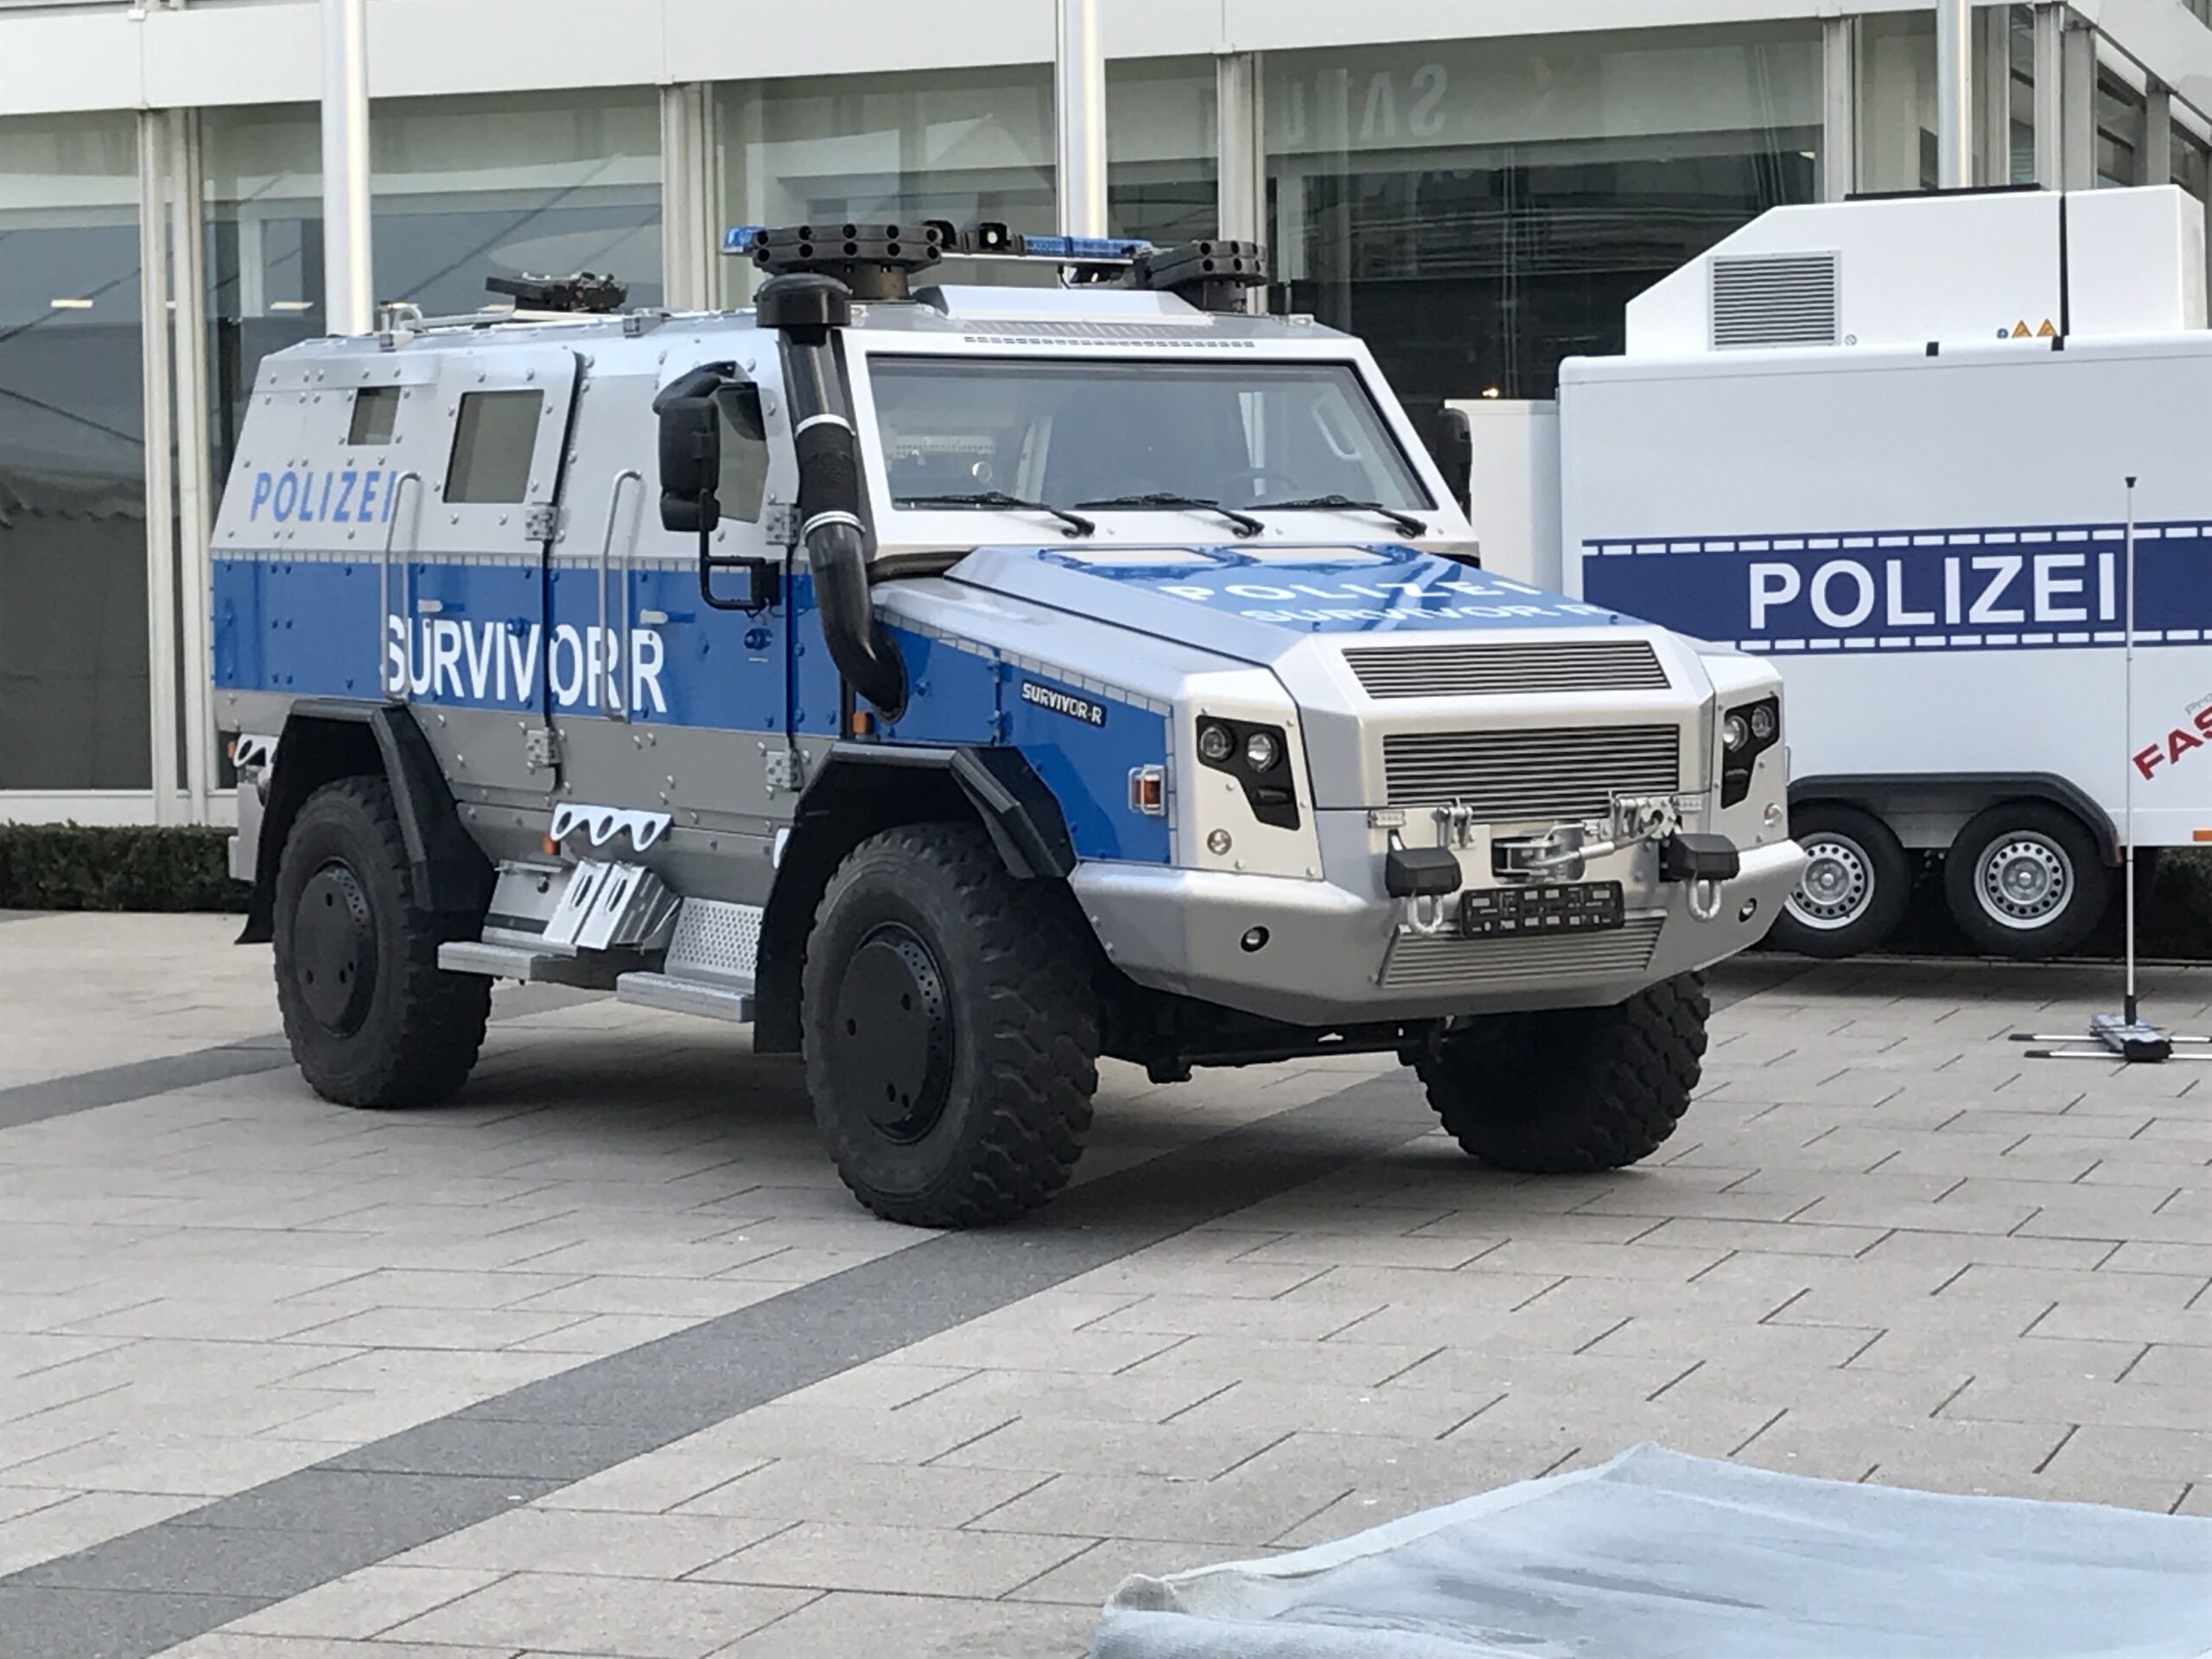 More tanks for German police